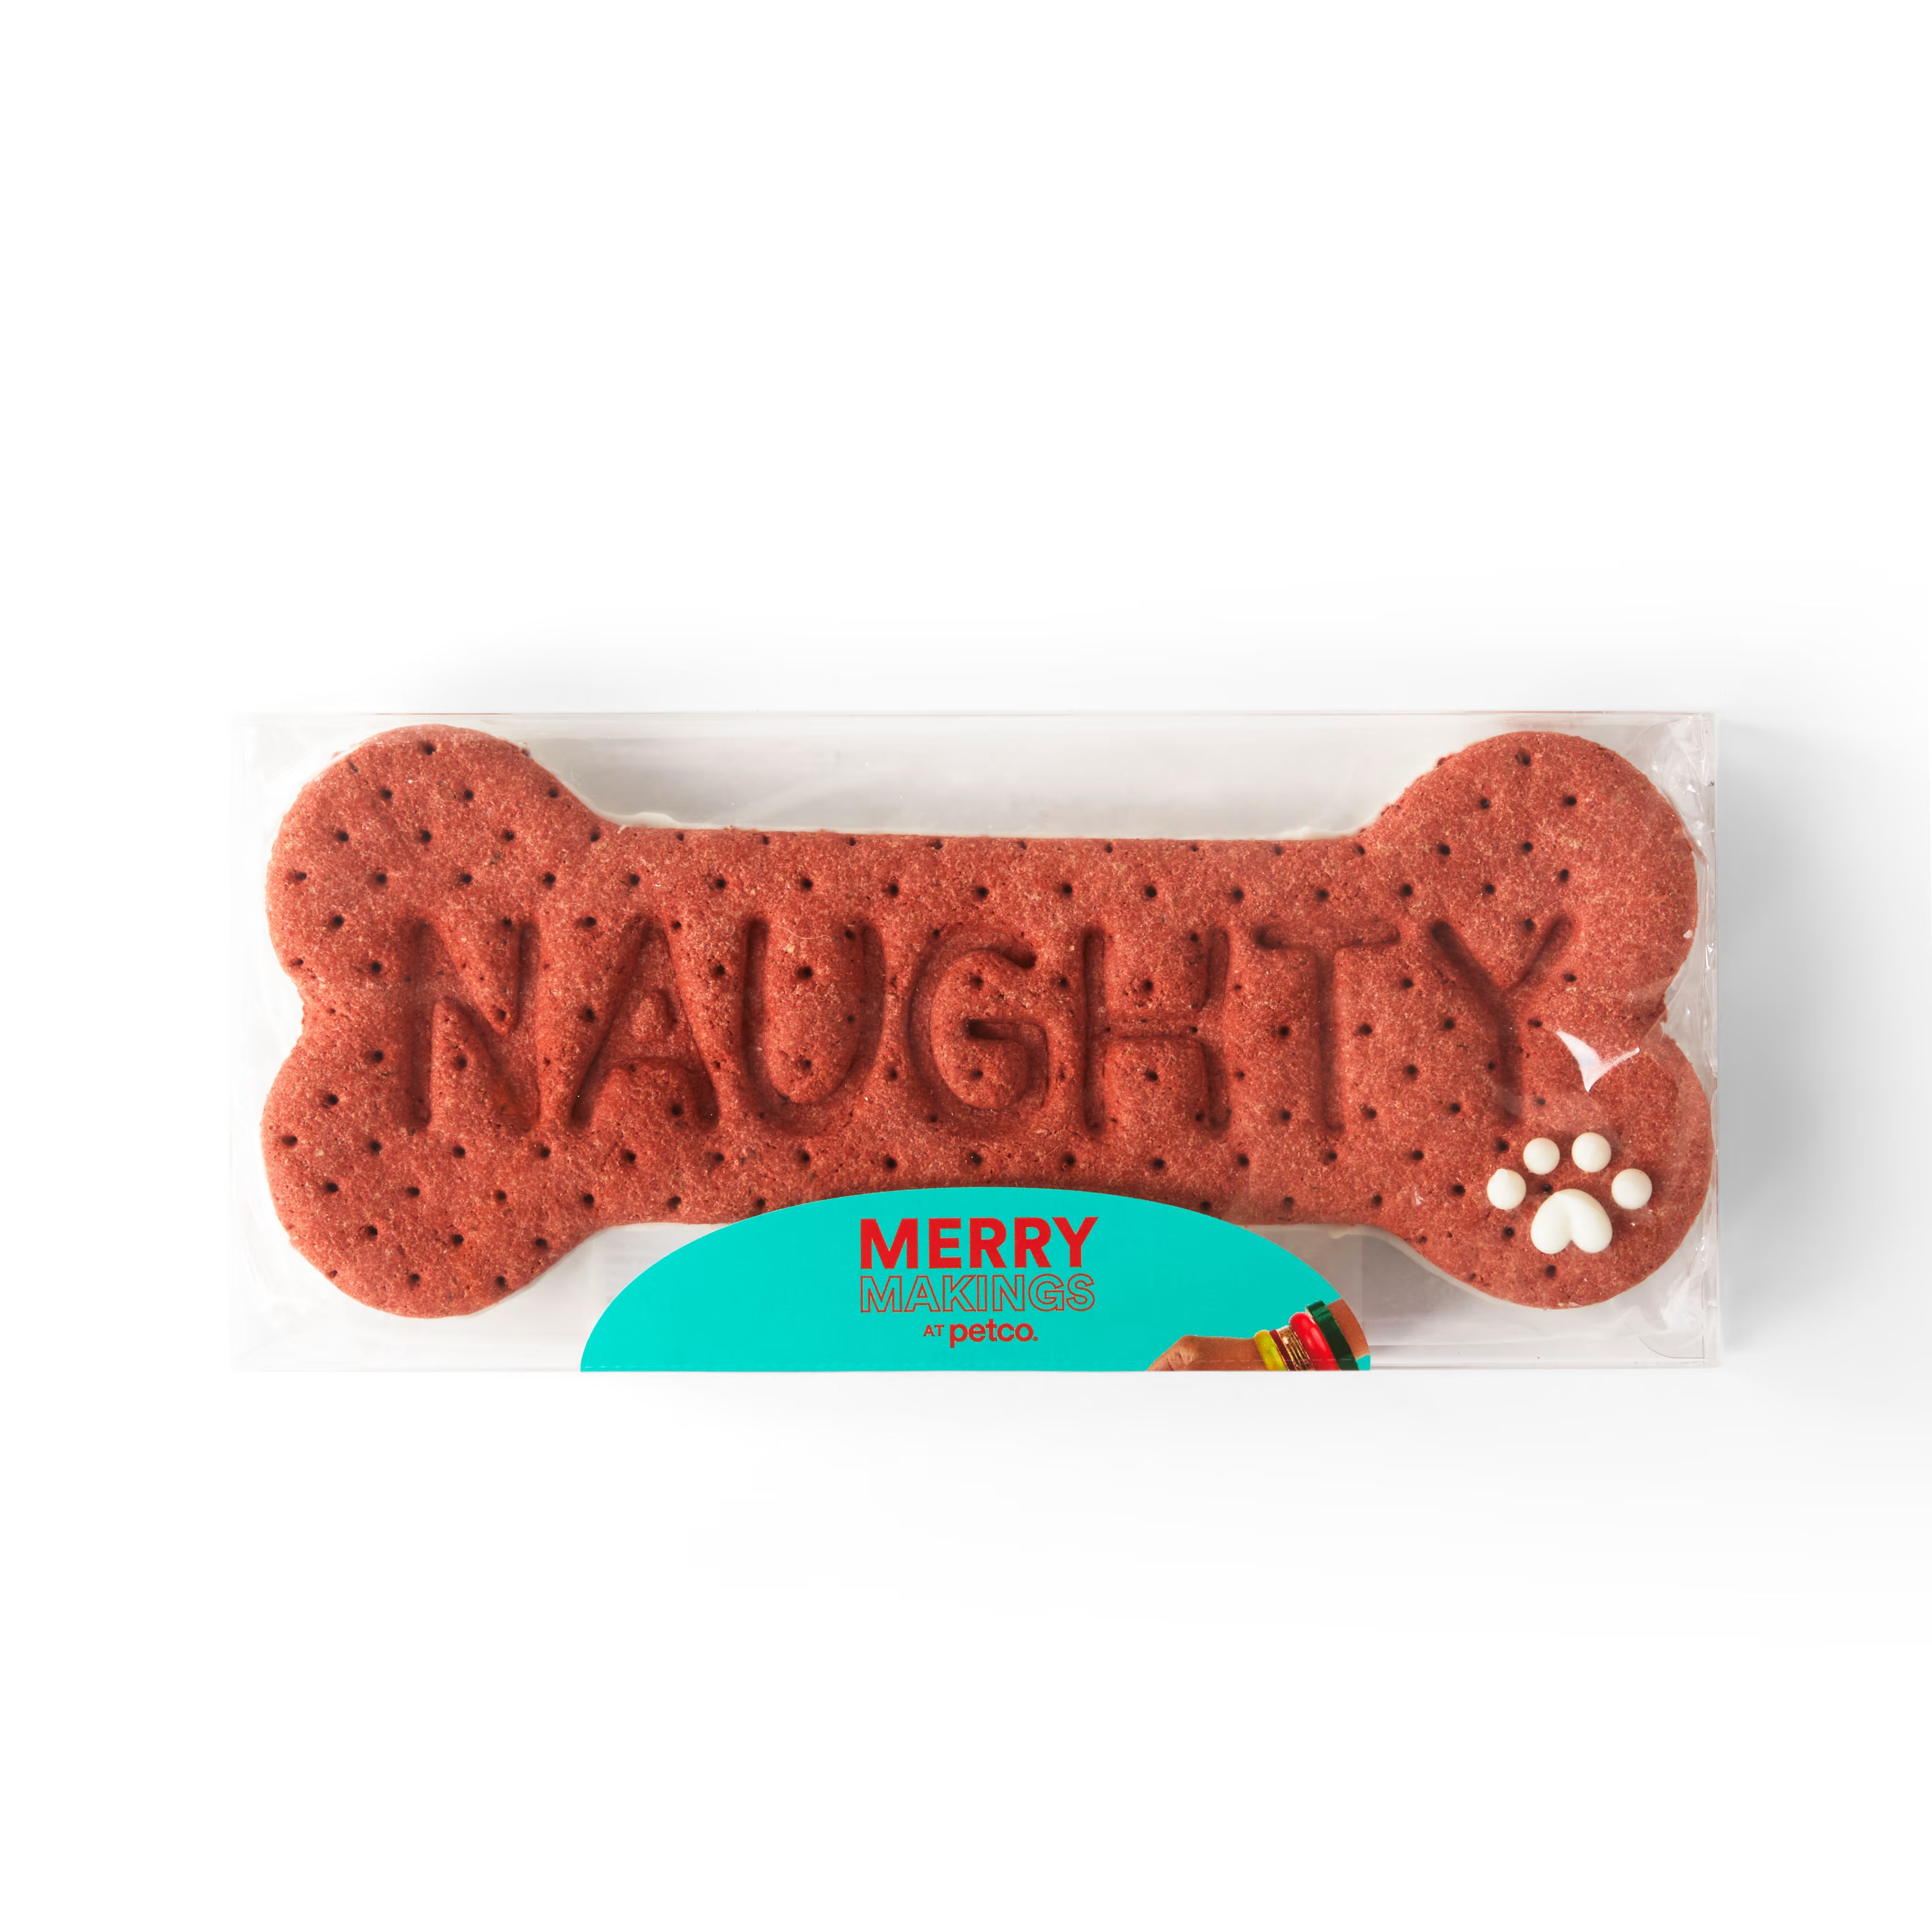 Merry Makings Bad to the Bone Apple Cinnamon-Flavored Dog Cookie, 4.4 oz. | Petco